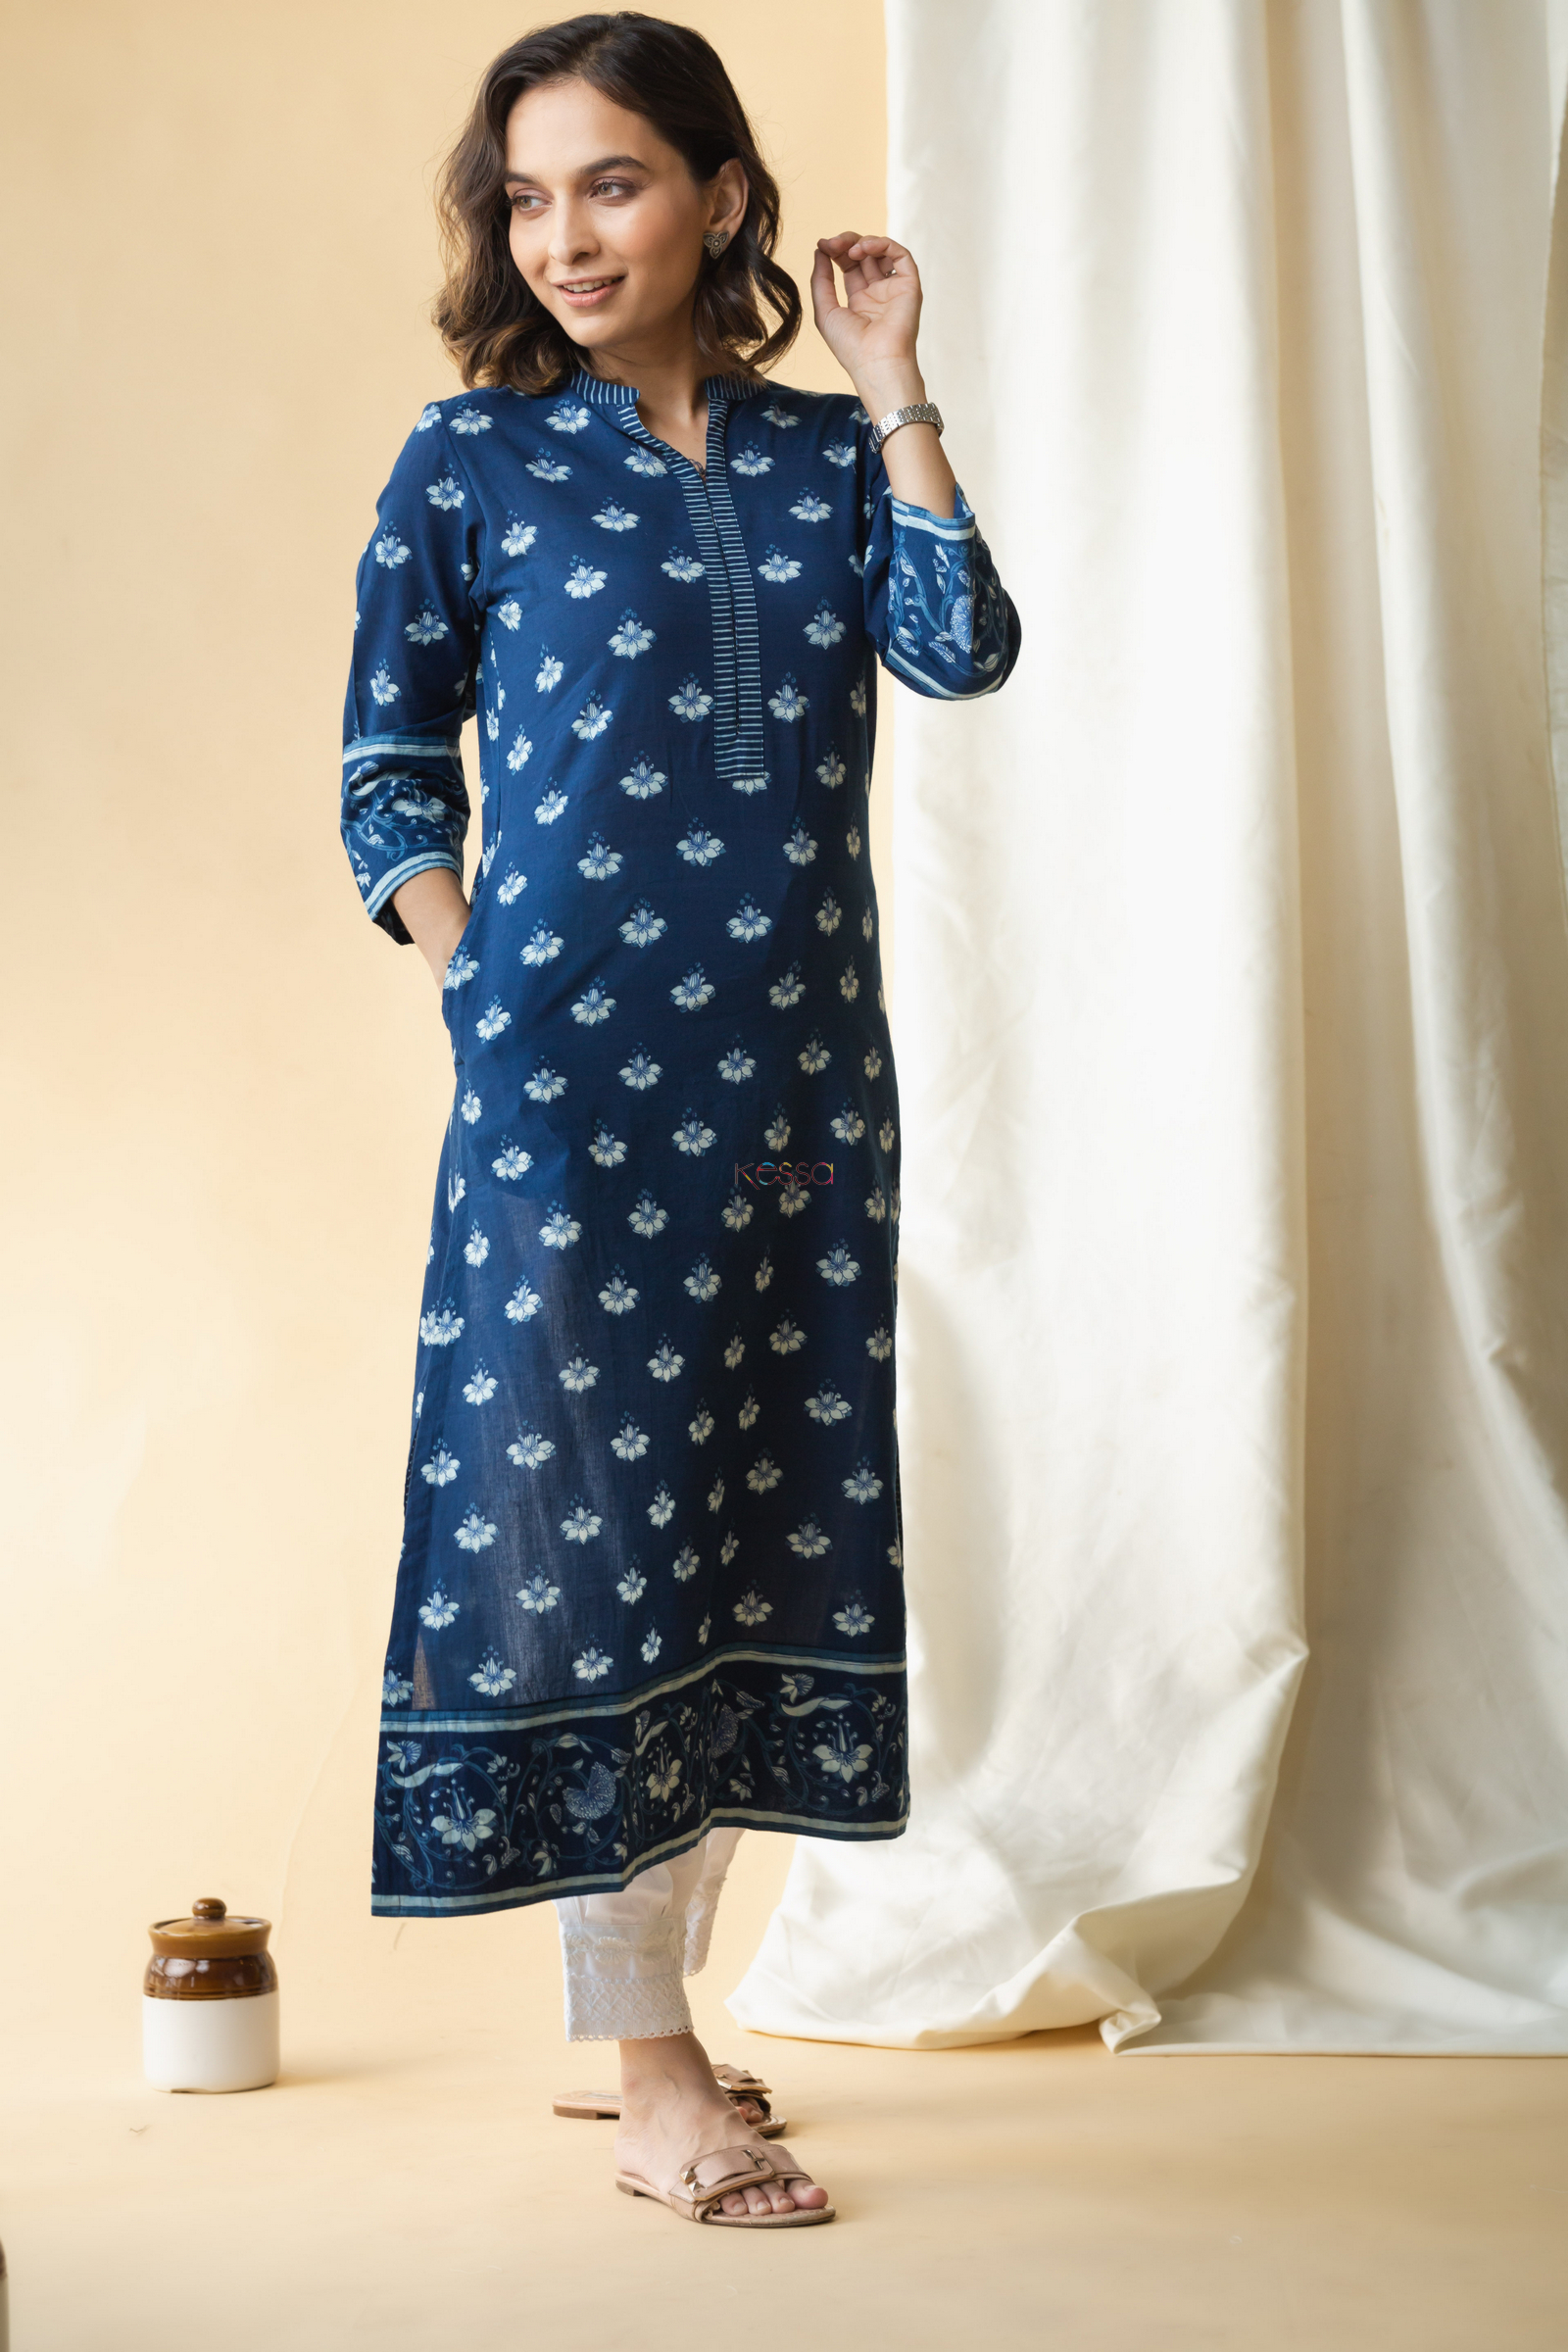 21 Indigo Kurtis ideas | kurta designs, kurti designs, clothes for women